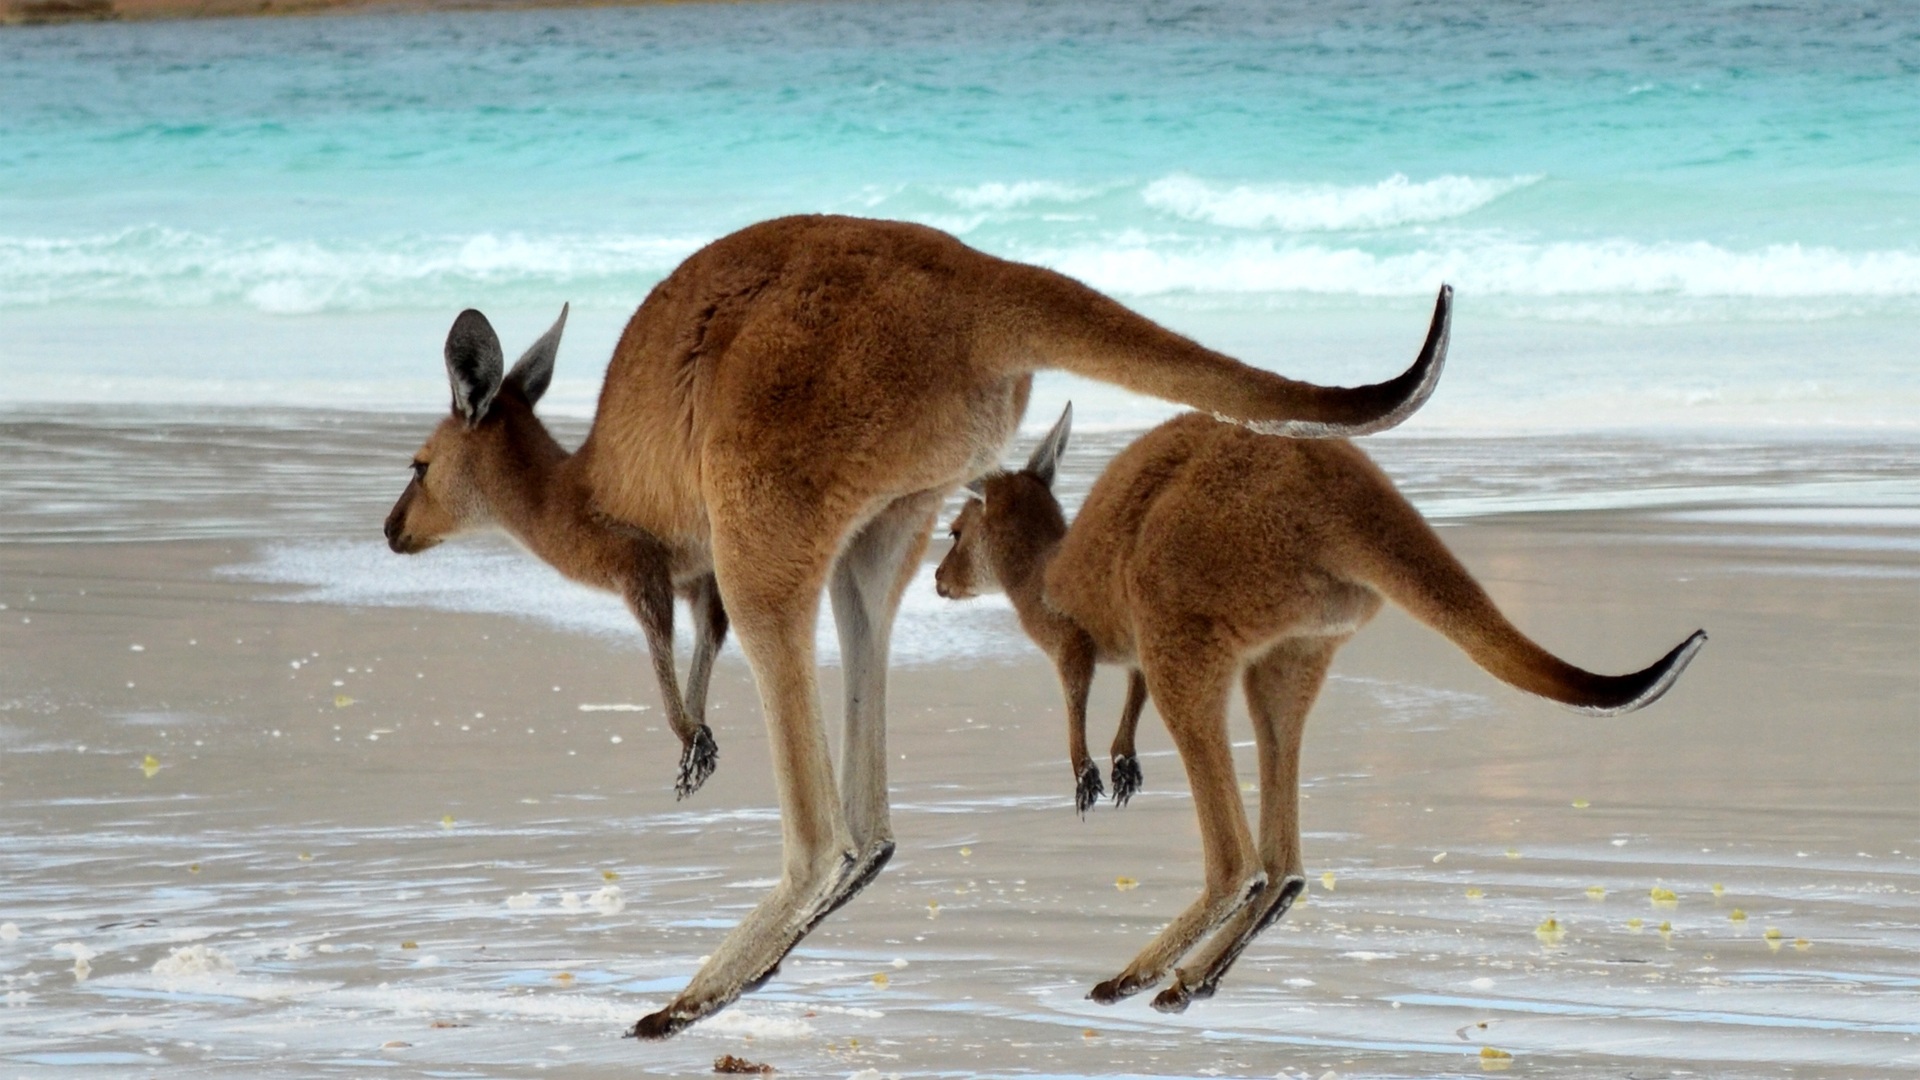 Kangaroo Wallpaper Image Photos Pictures Background